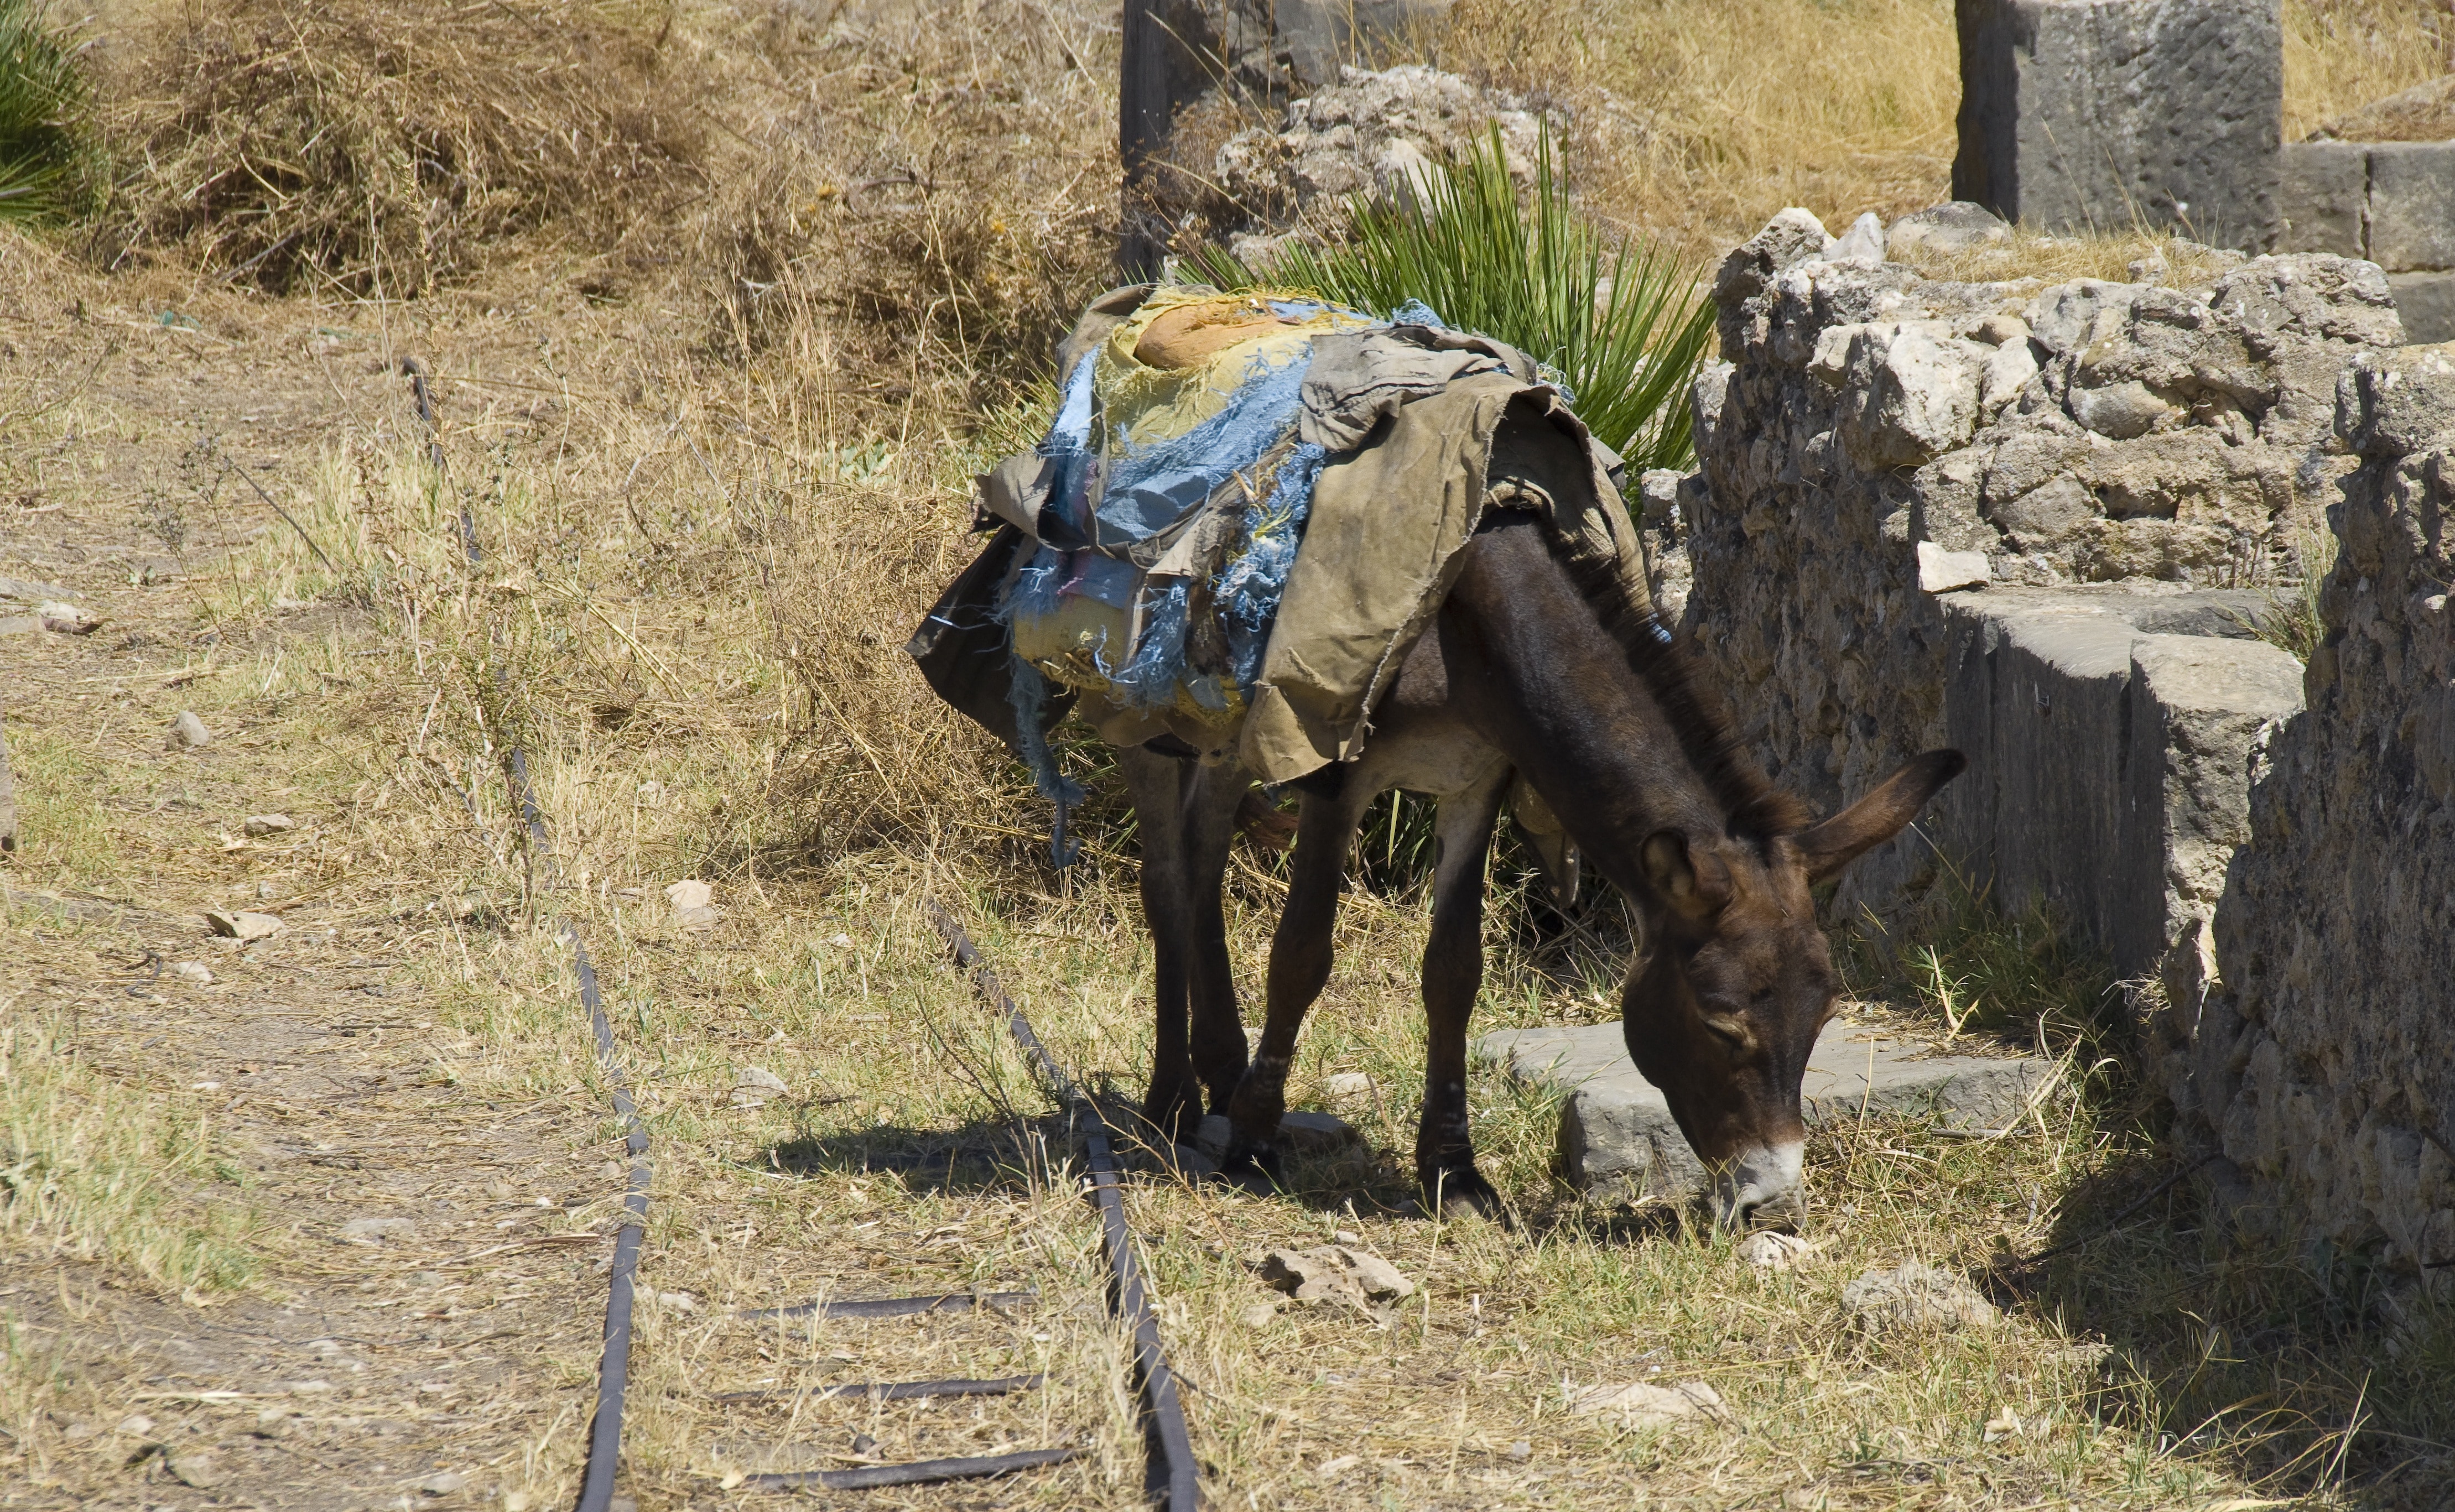 brown donkey eating grass during daytime